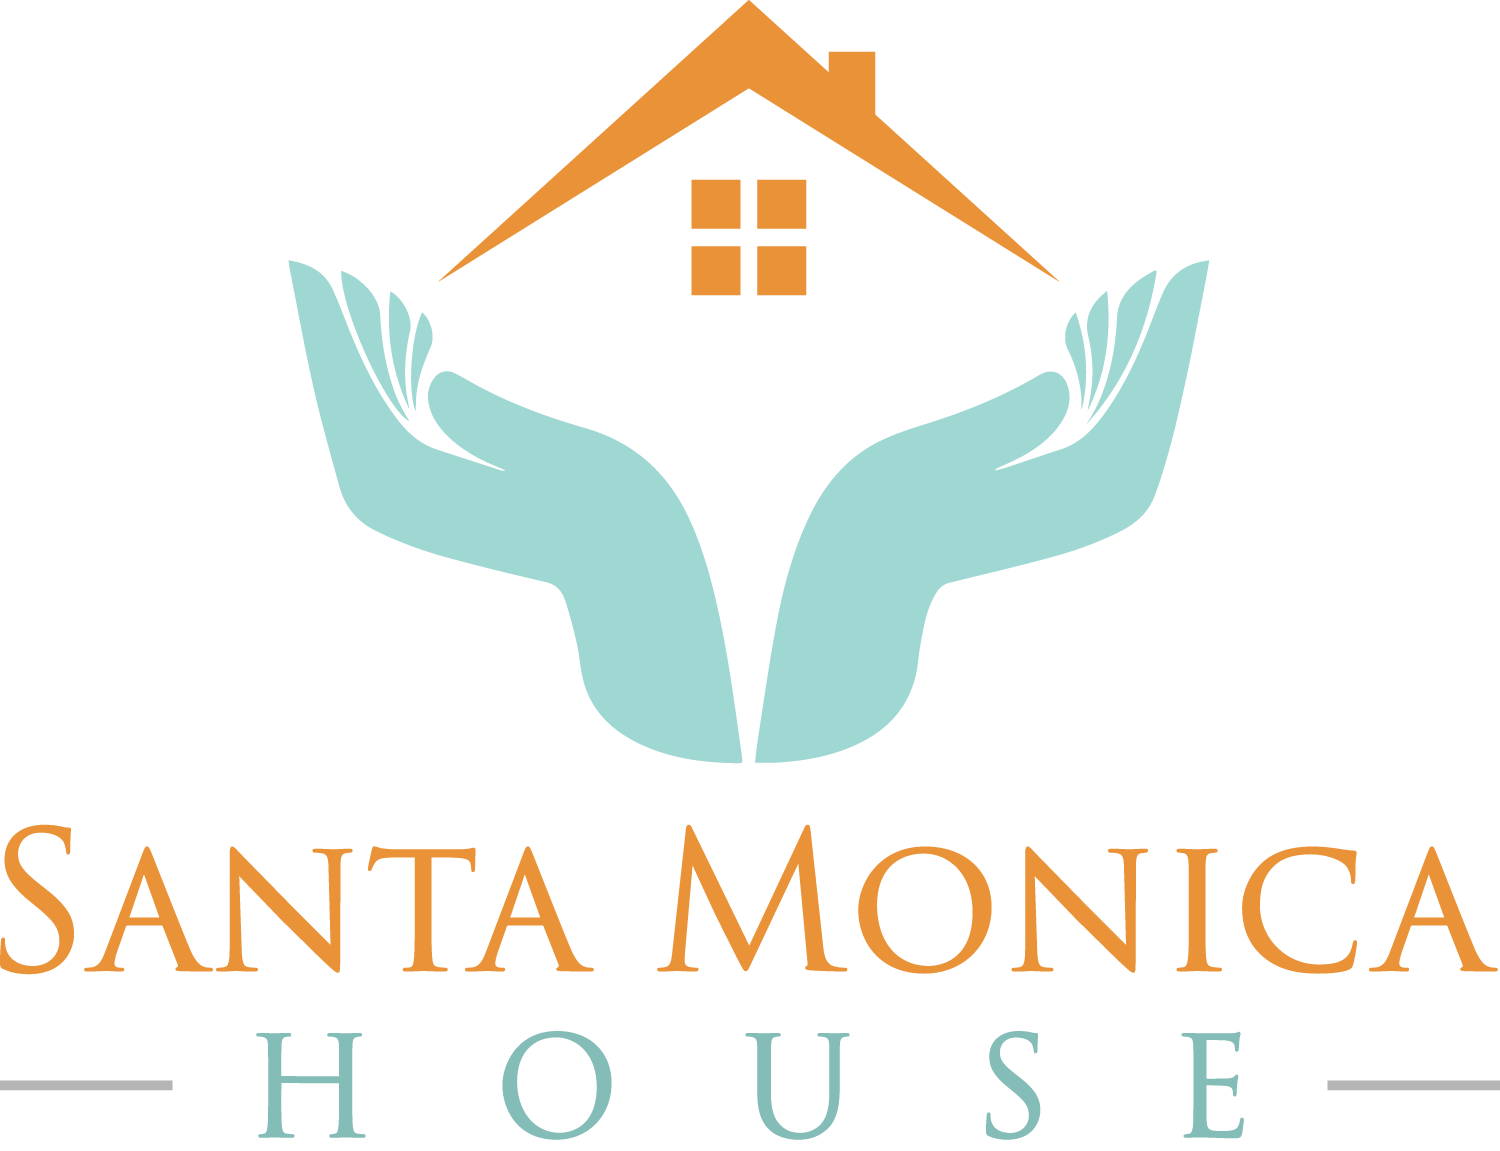 Santa Monica House